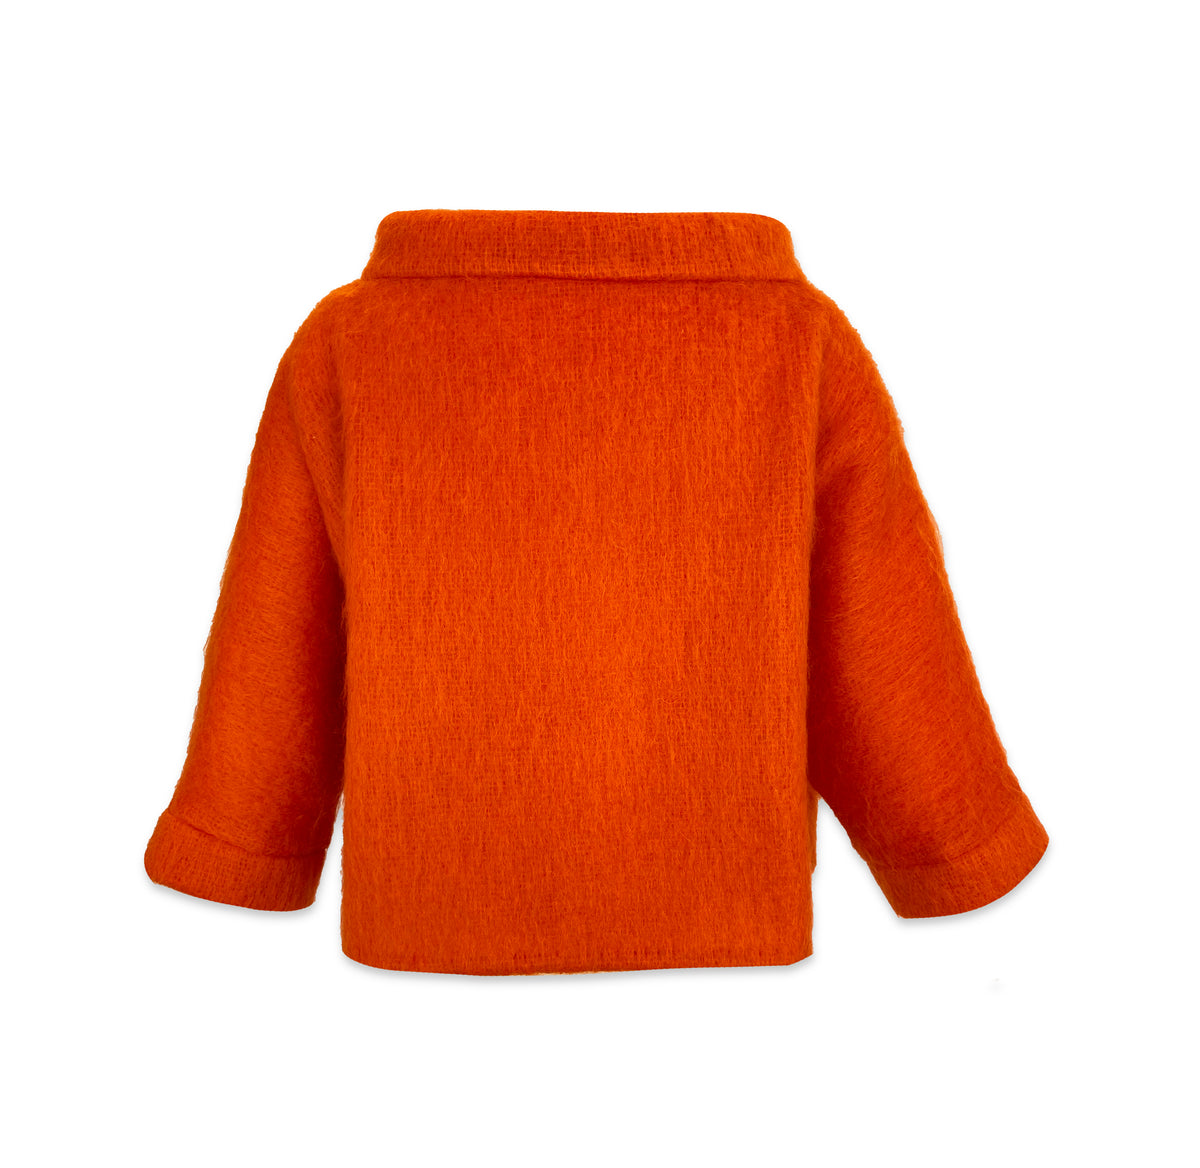 Mohair genser i oransje